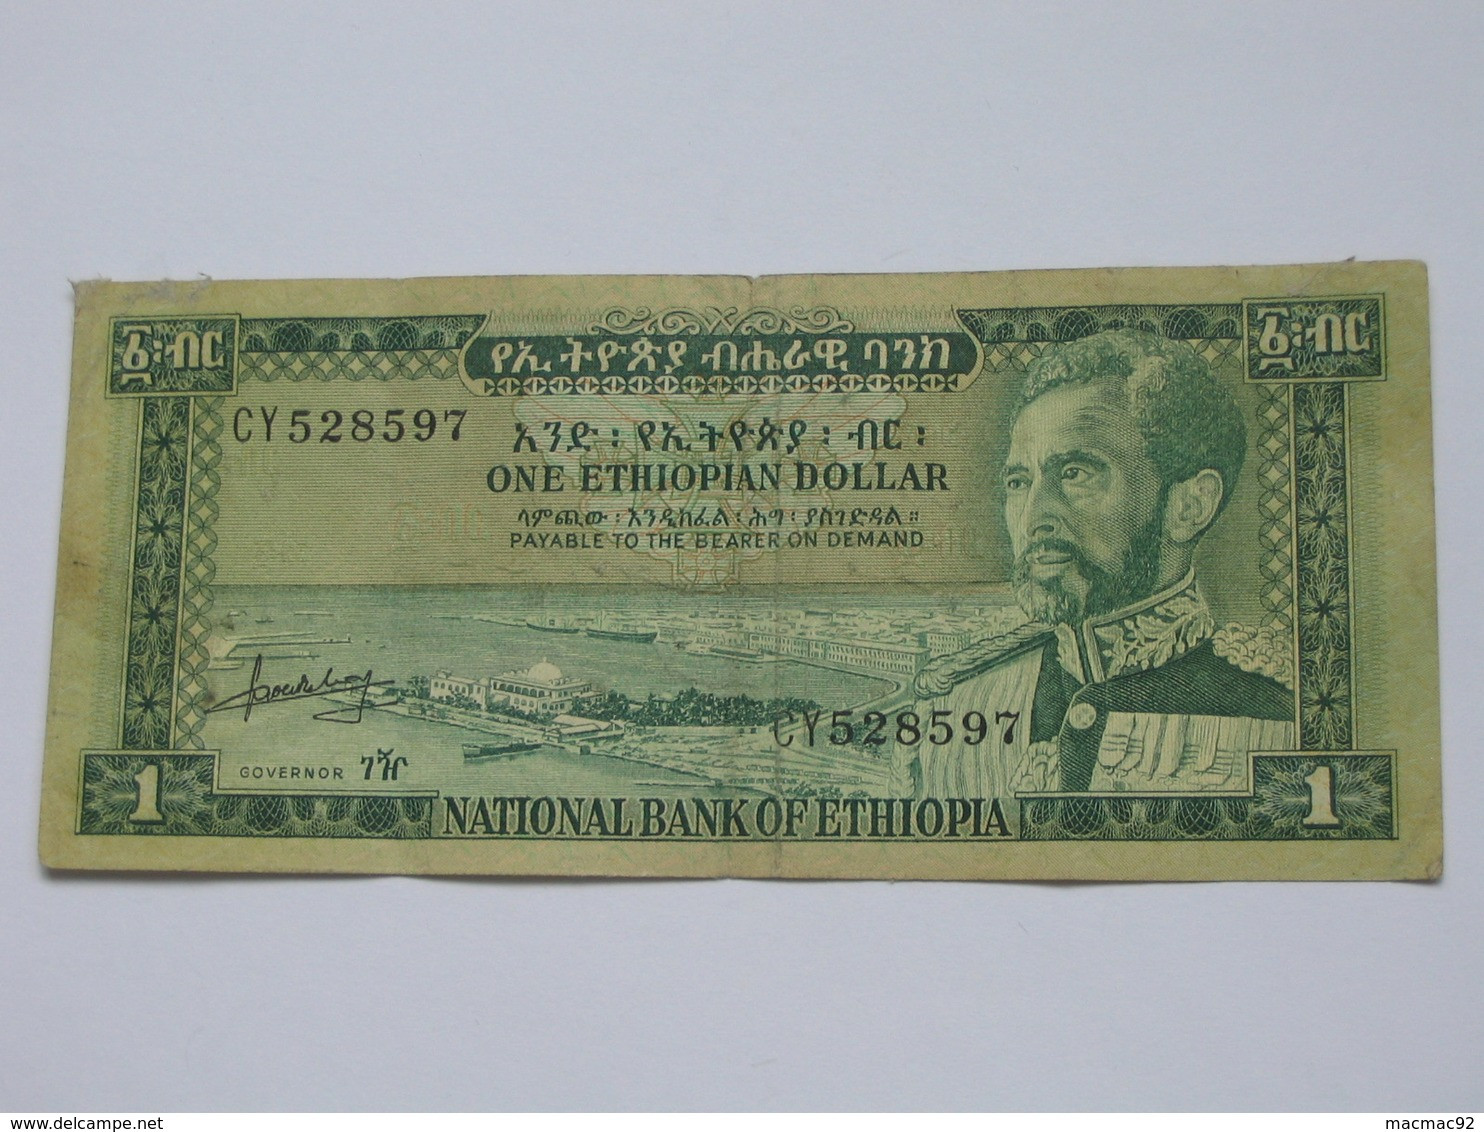 1 One Ethiopian Dollar 1966 - National Bank Of Ethiopia    **** EN  ACHAT IMMEDIAT  **** - Ethiopie